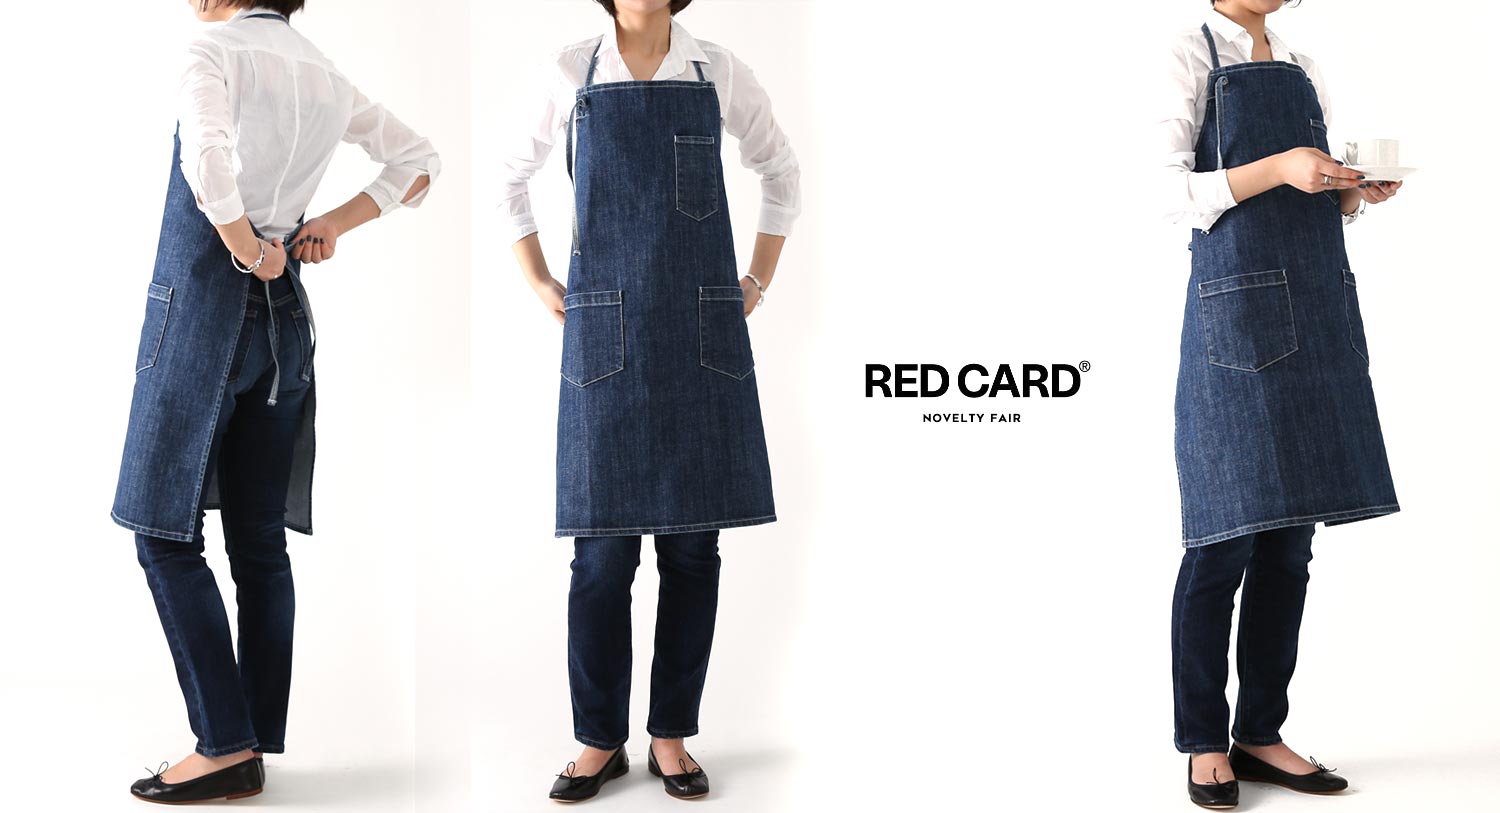 Red Card レッドカード ノベルティフェア開催のお知らせ Douce Harmonie Rakuten店 Yahoo店 Ndc Japan Online エヌディシージャパン カンパニーサイト オンラインストア